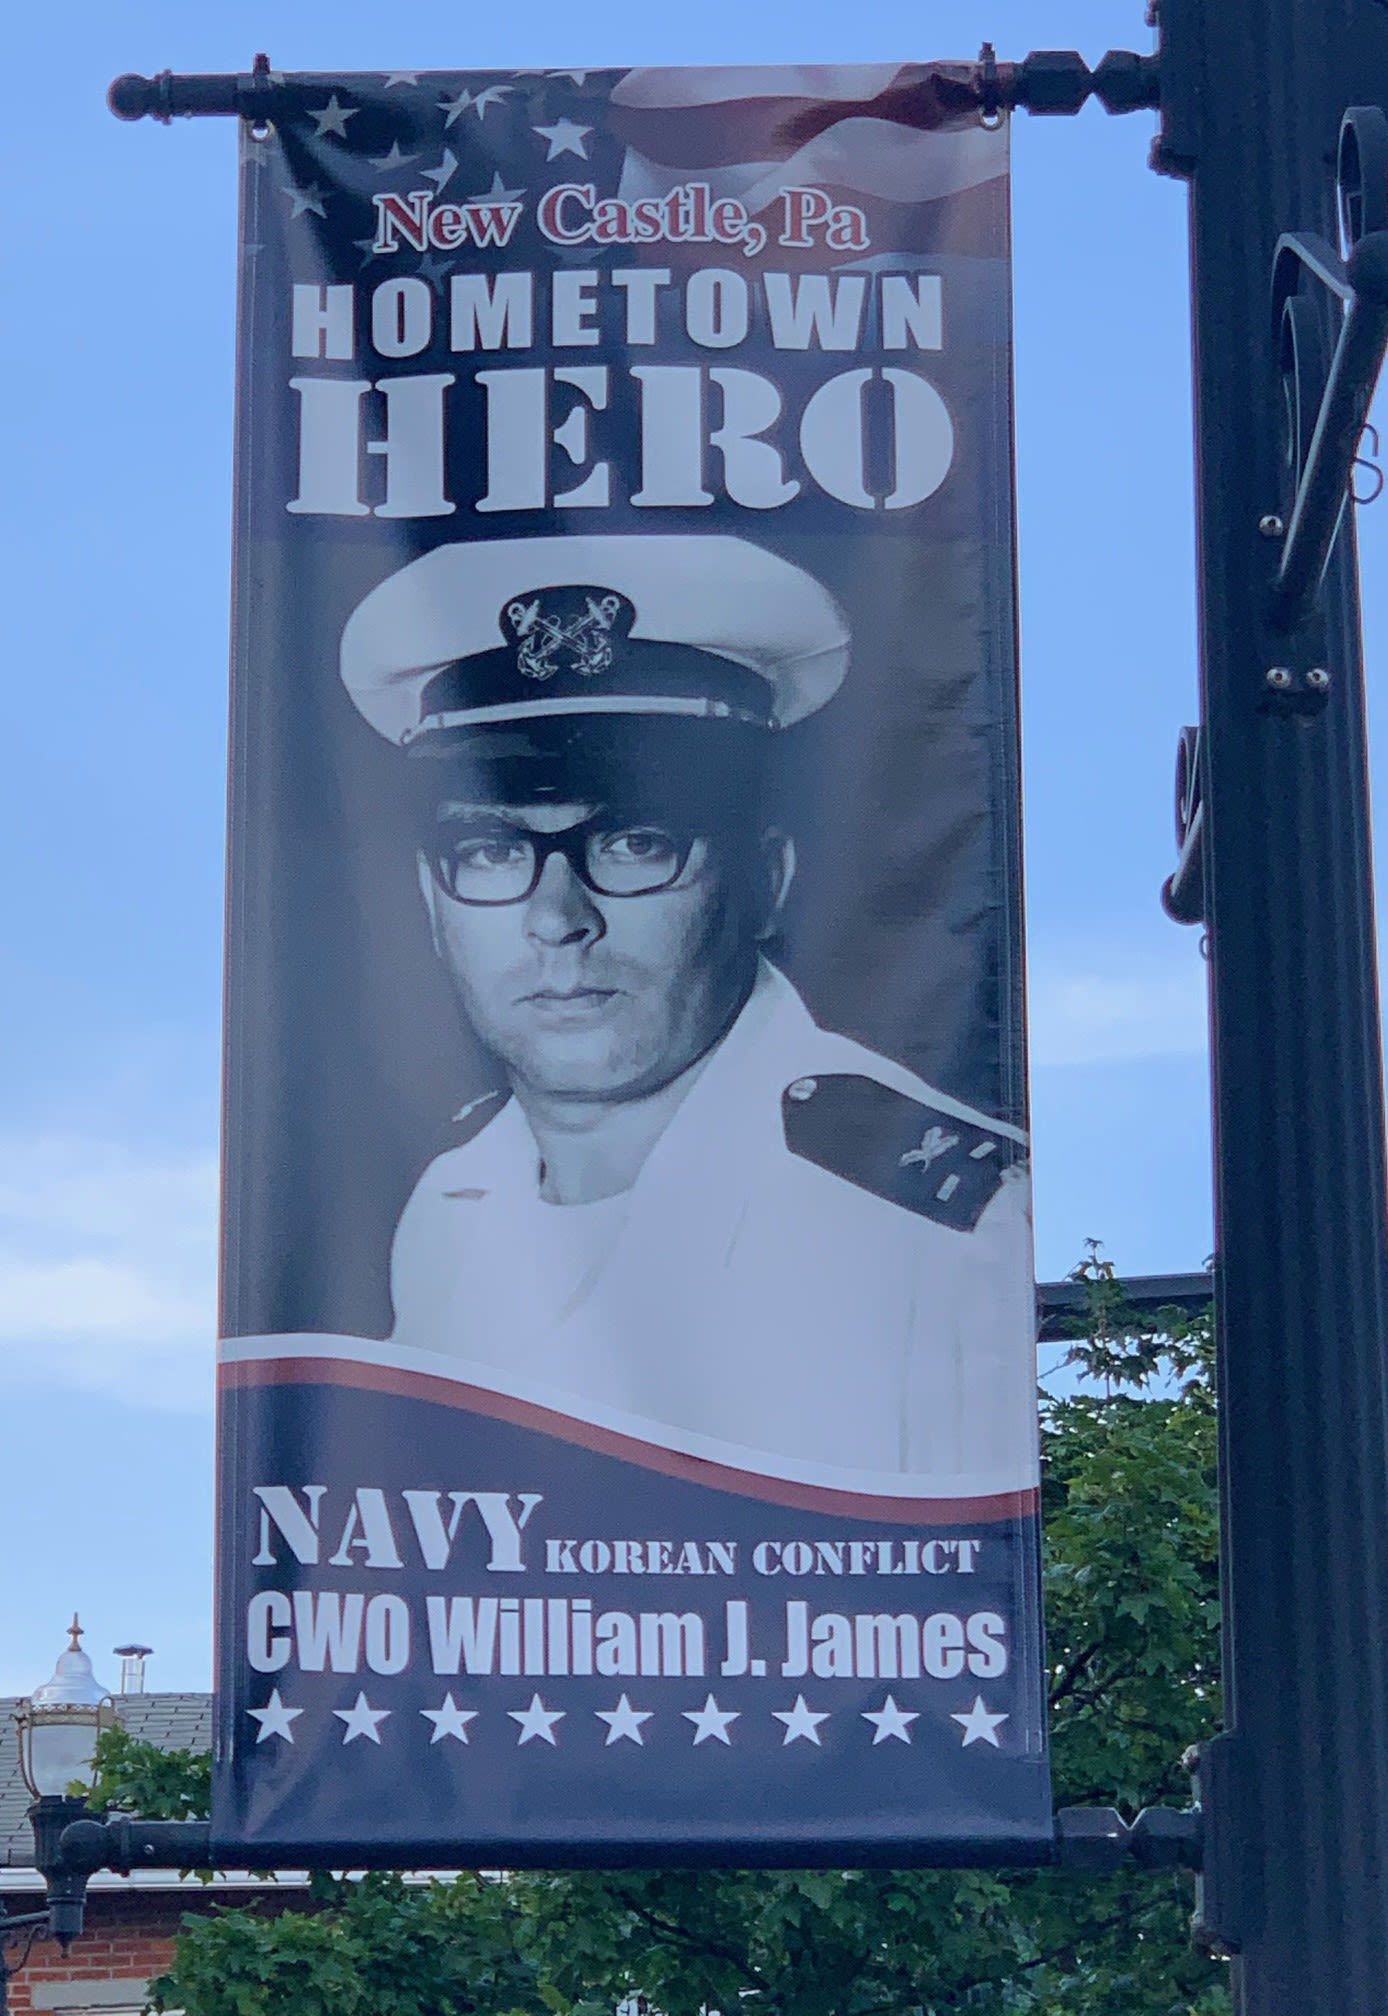 Hometown Heroes banner program proposed in Ramona to honor military veterans, first responders